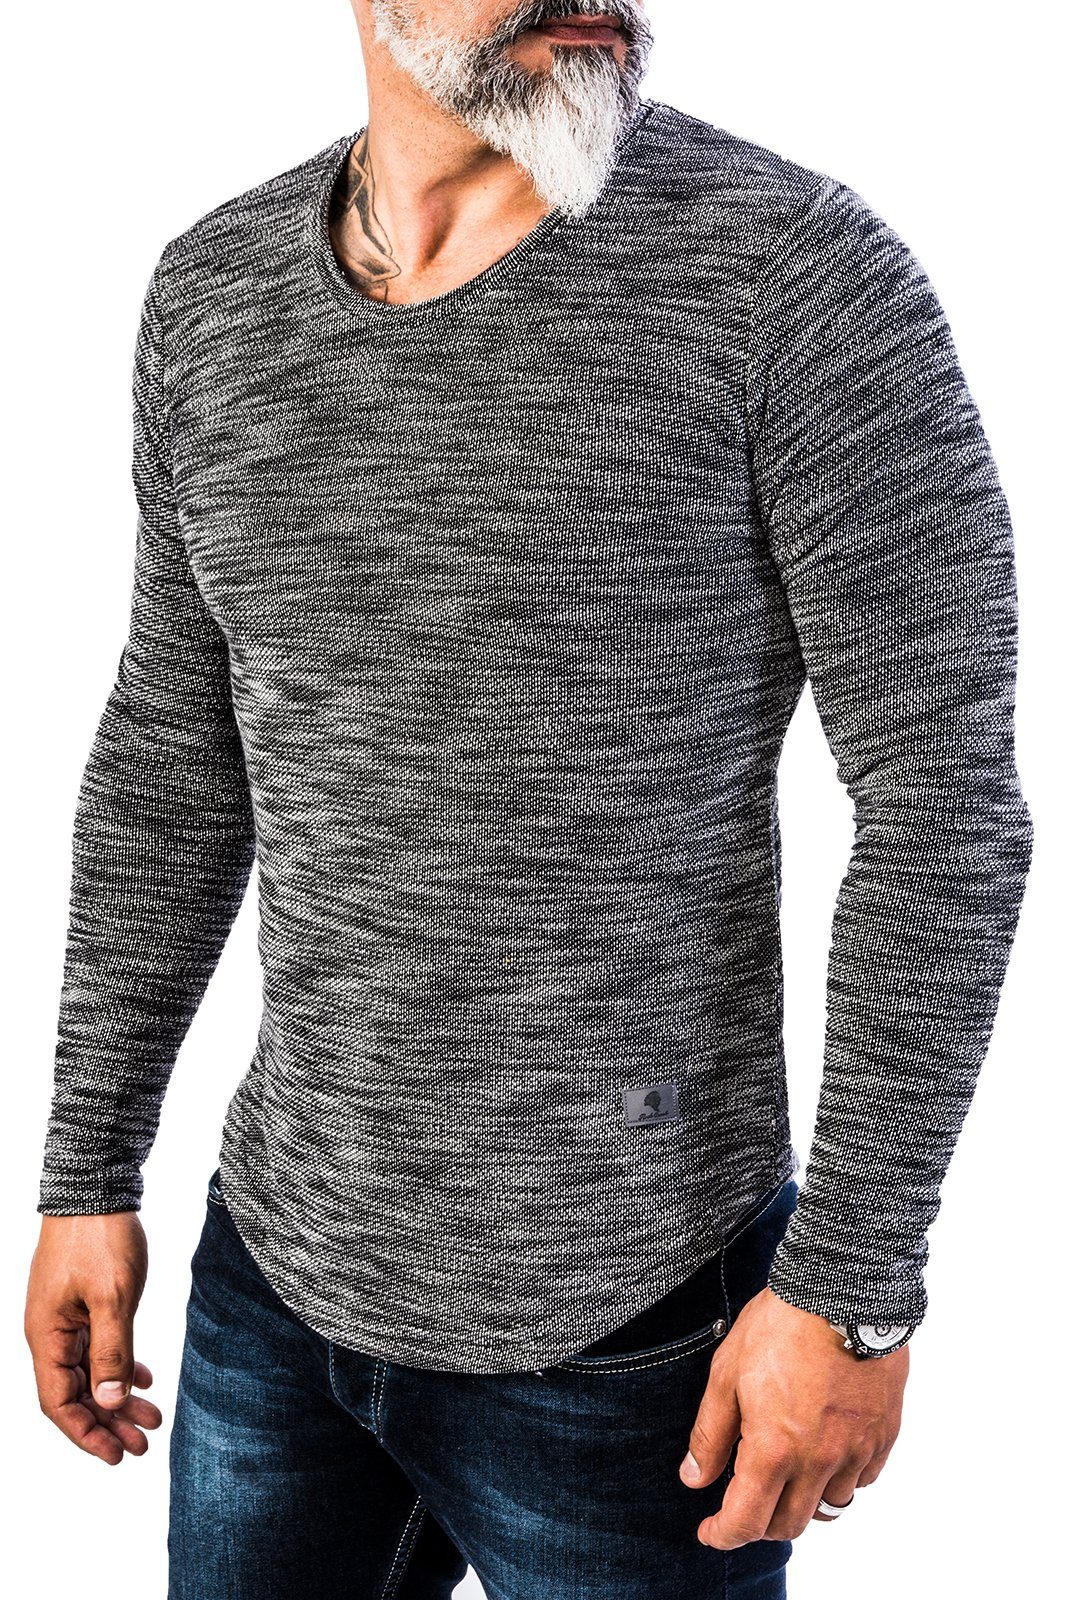 Rock Creek Sweatshirt Herren Longsleeve Shirt H-144 Schwarz | Sweatshirts